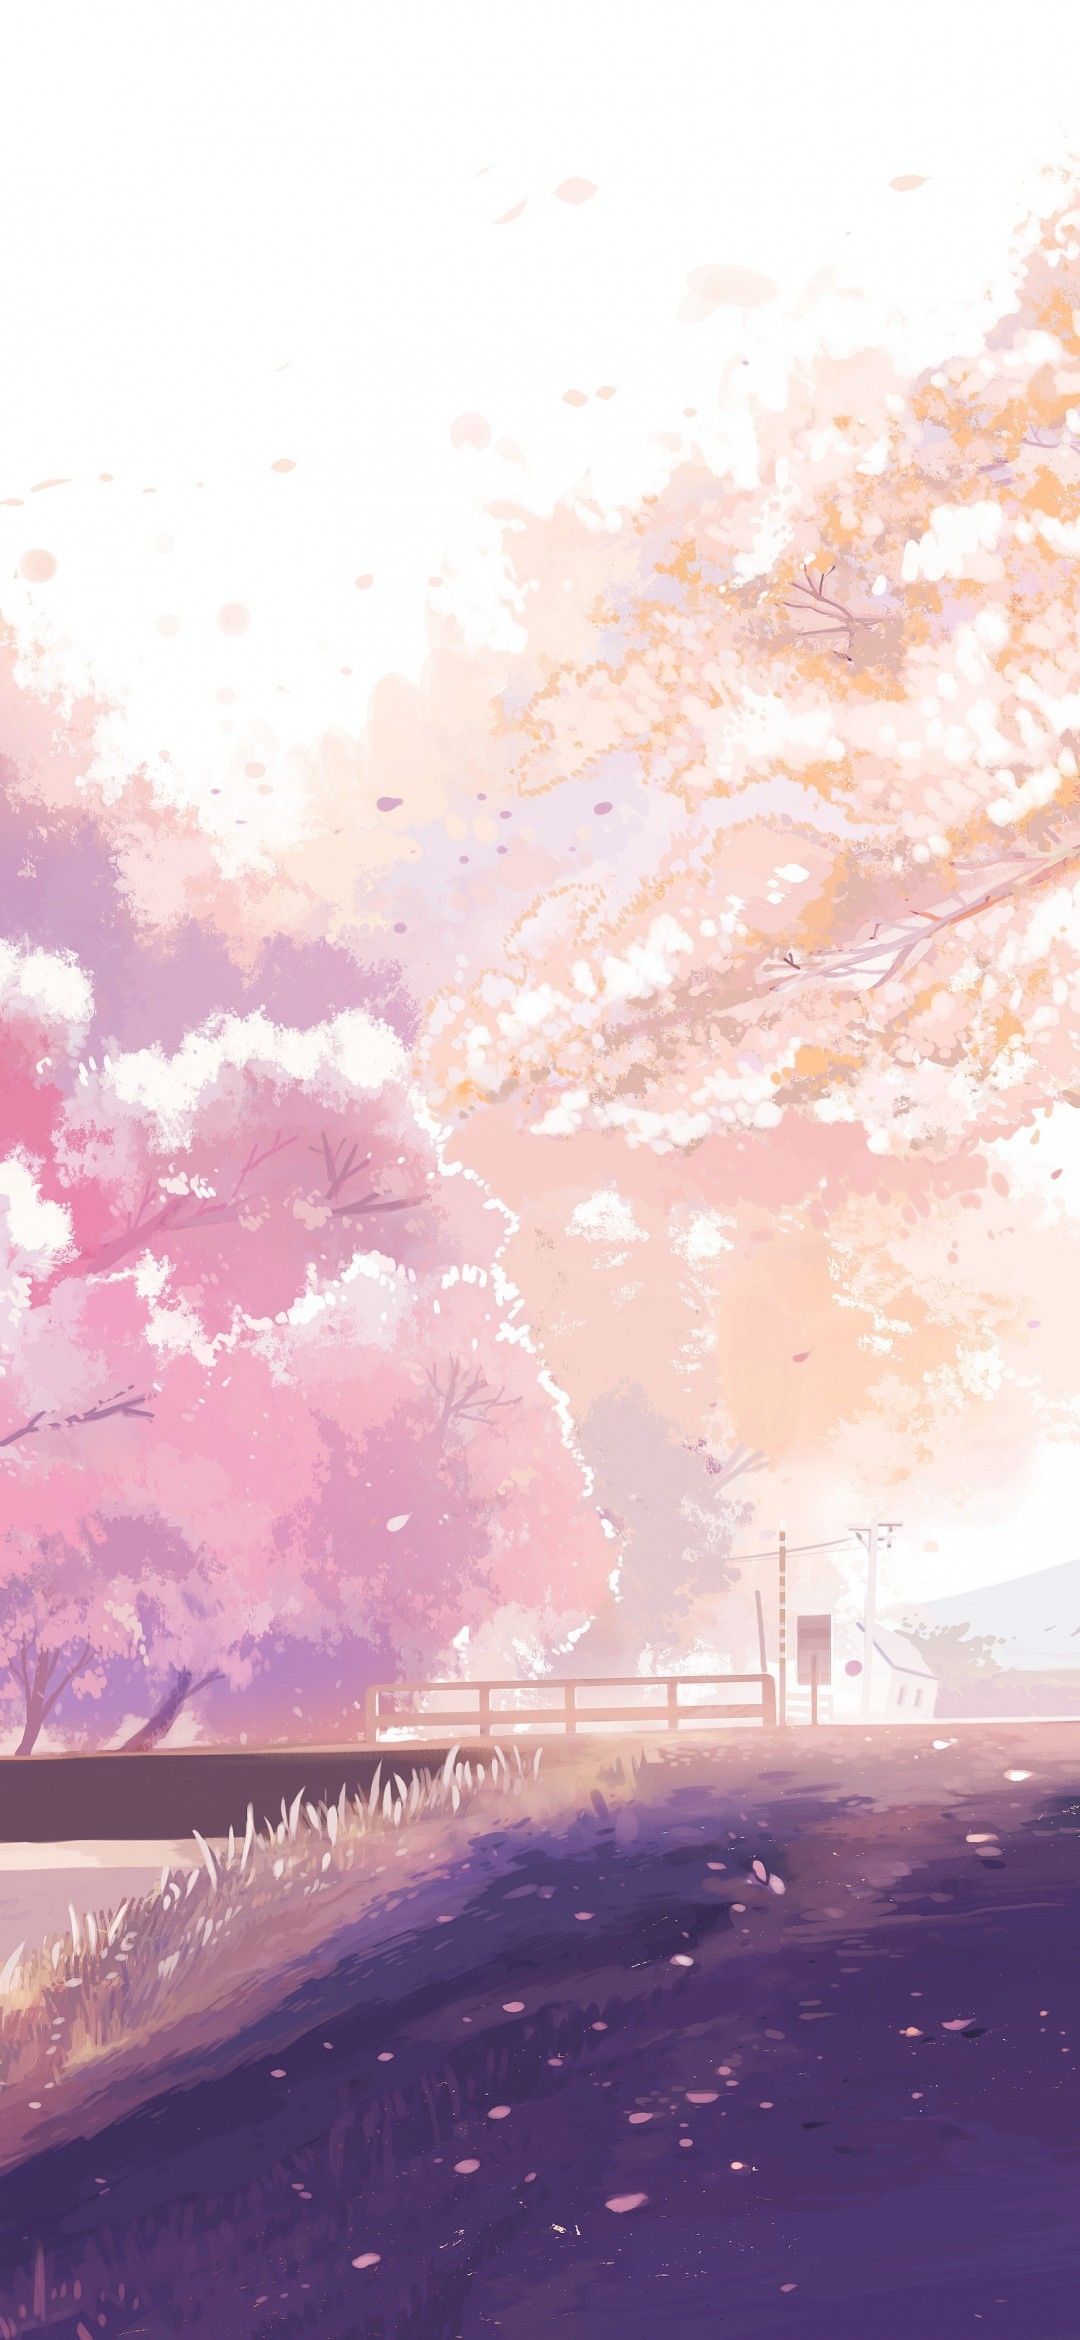 Download 1080x2340 Anime Couple, Scenic, Romance, Sakura Blossom